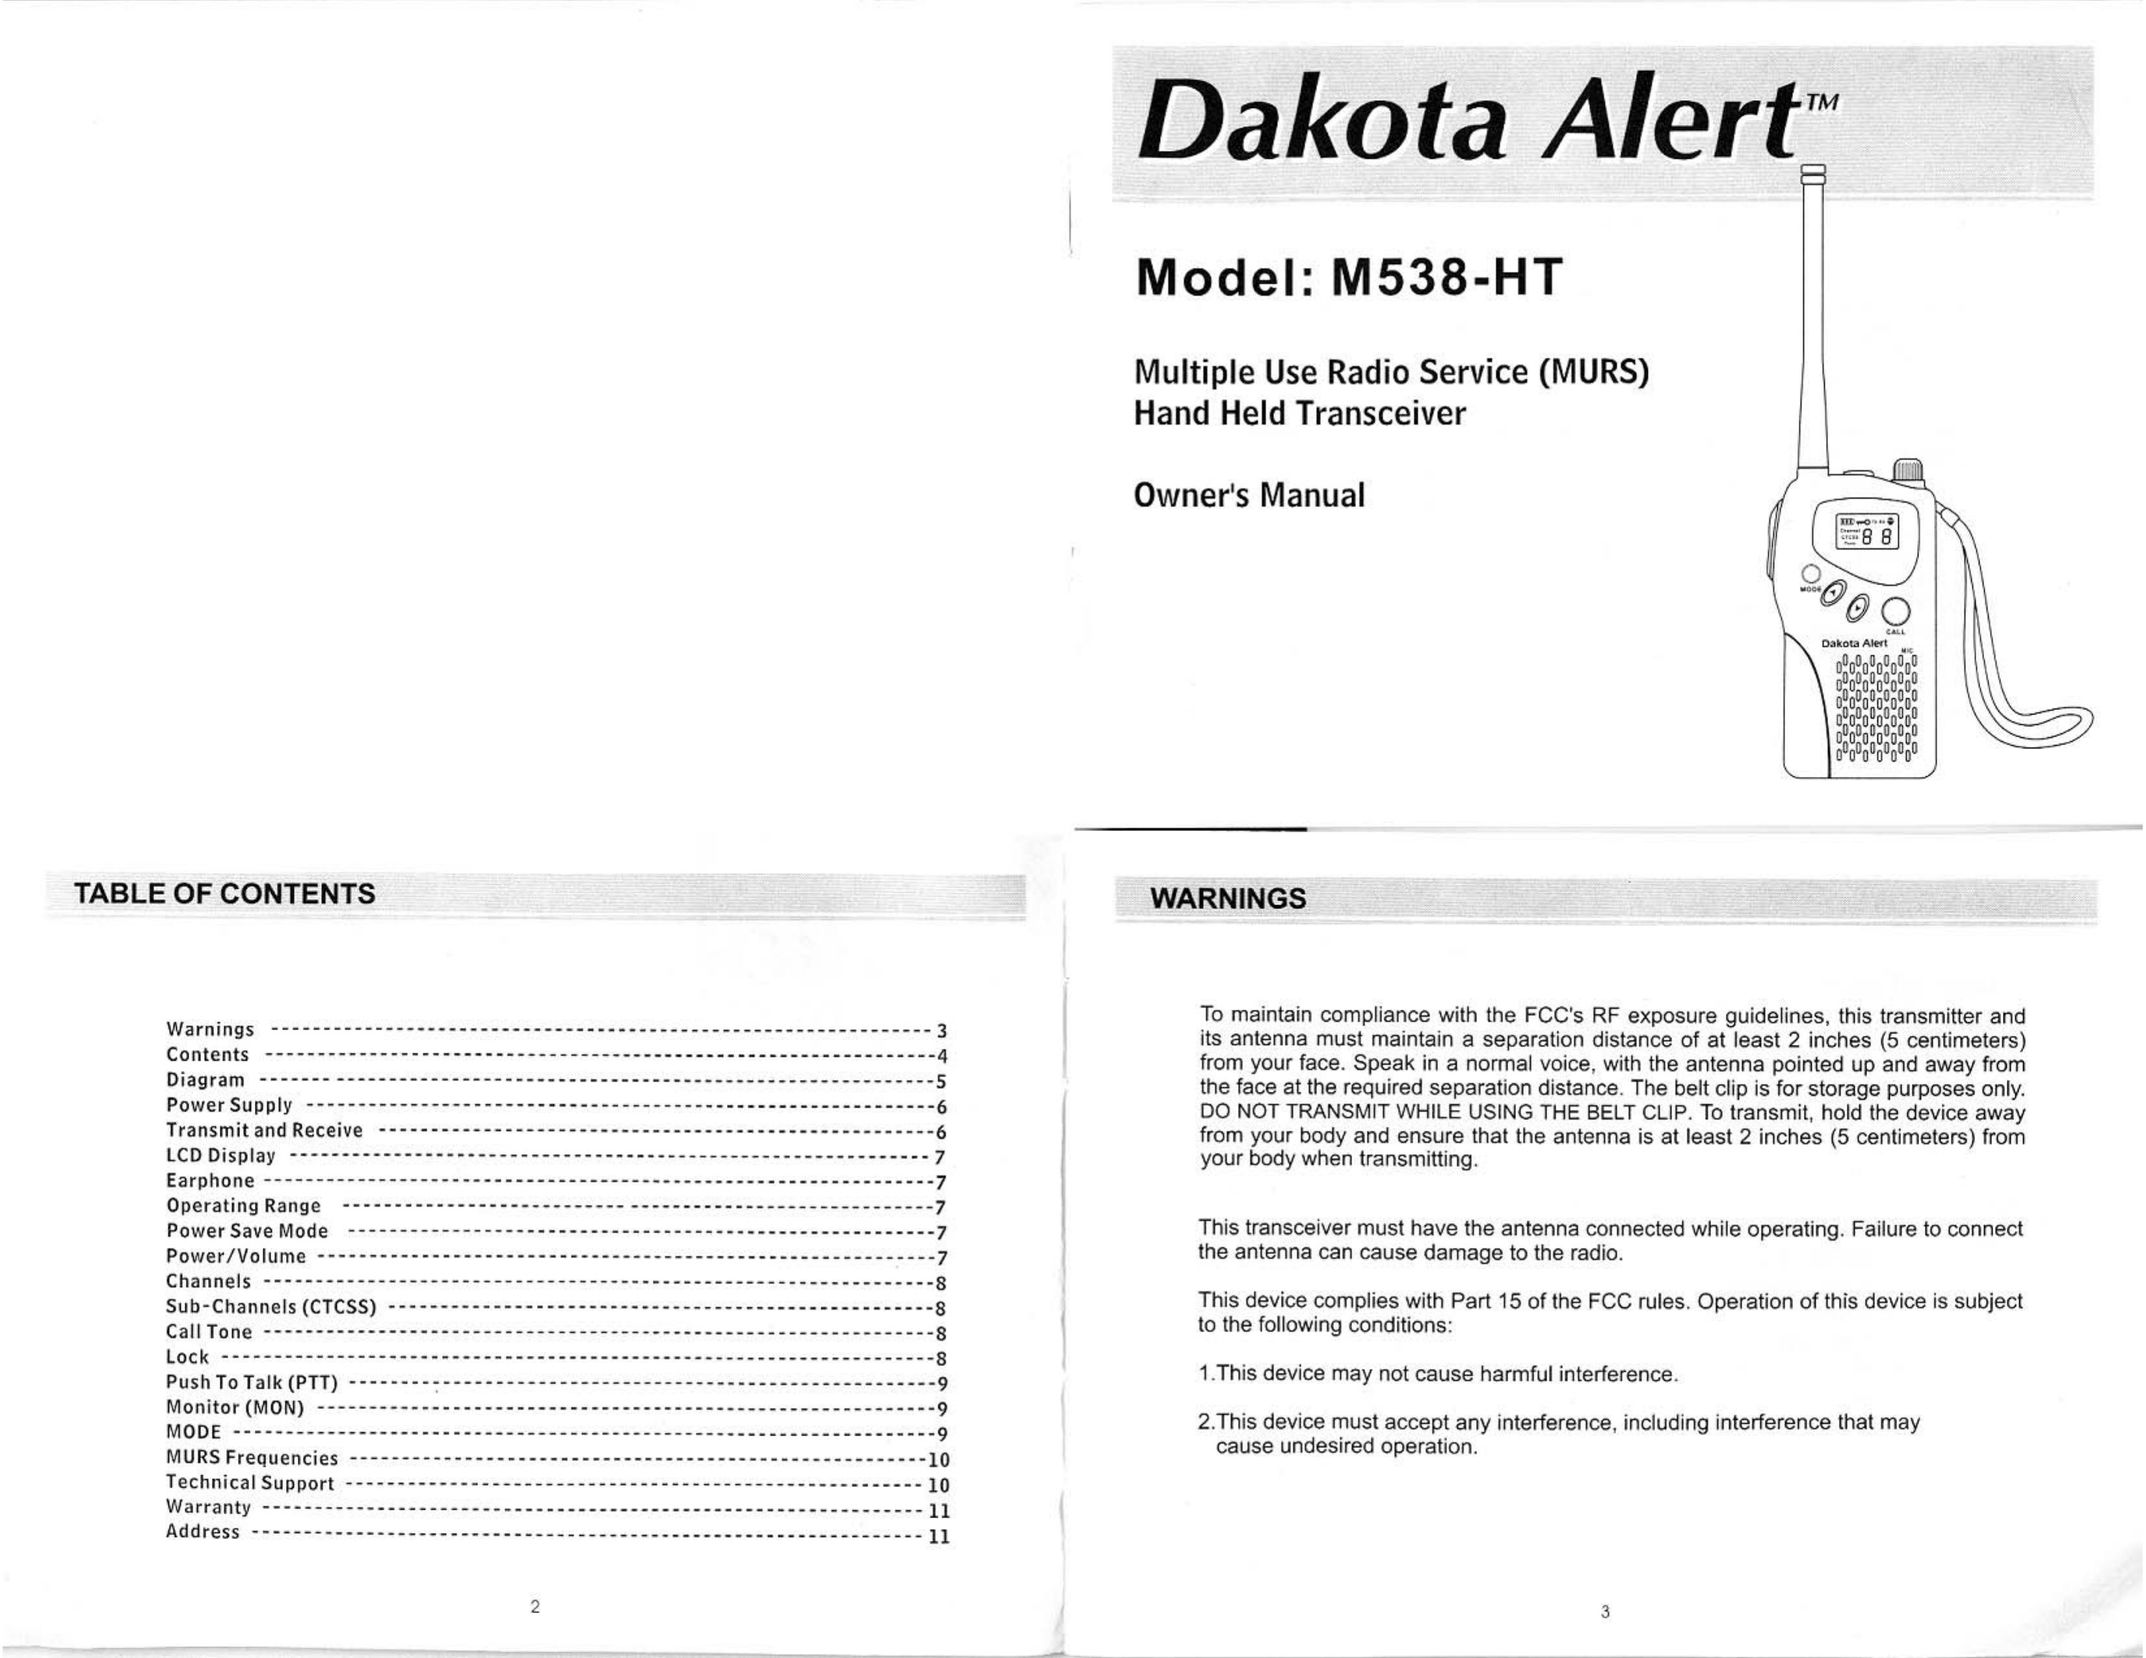 Dakota Alert Multiple Use Radio Serice (MURS) Hand Held Transceiver Portable Radio User Manual